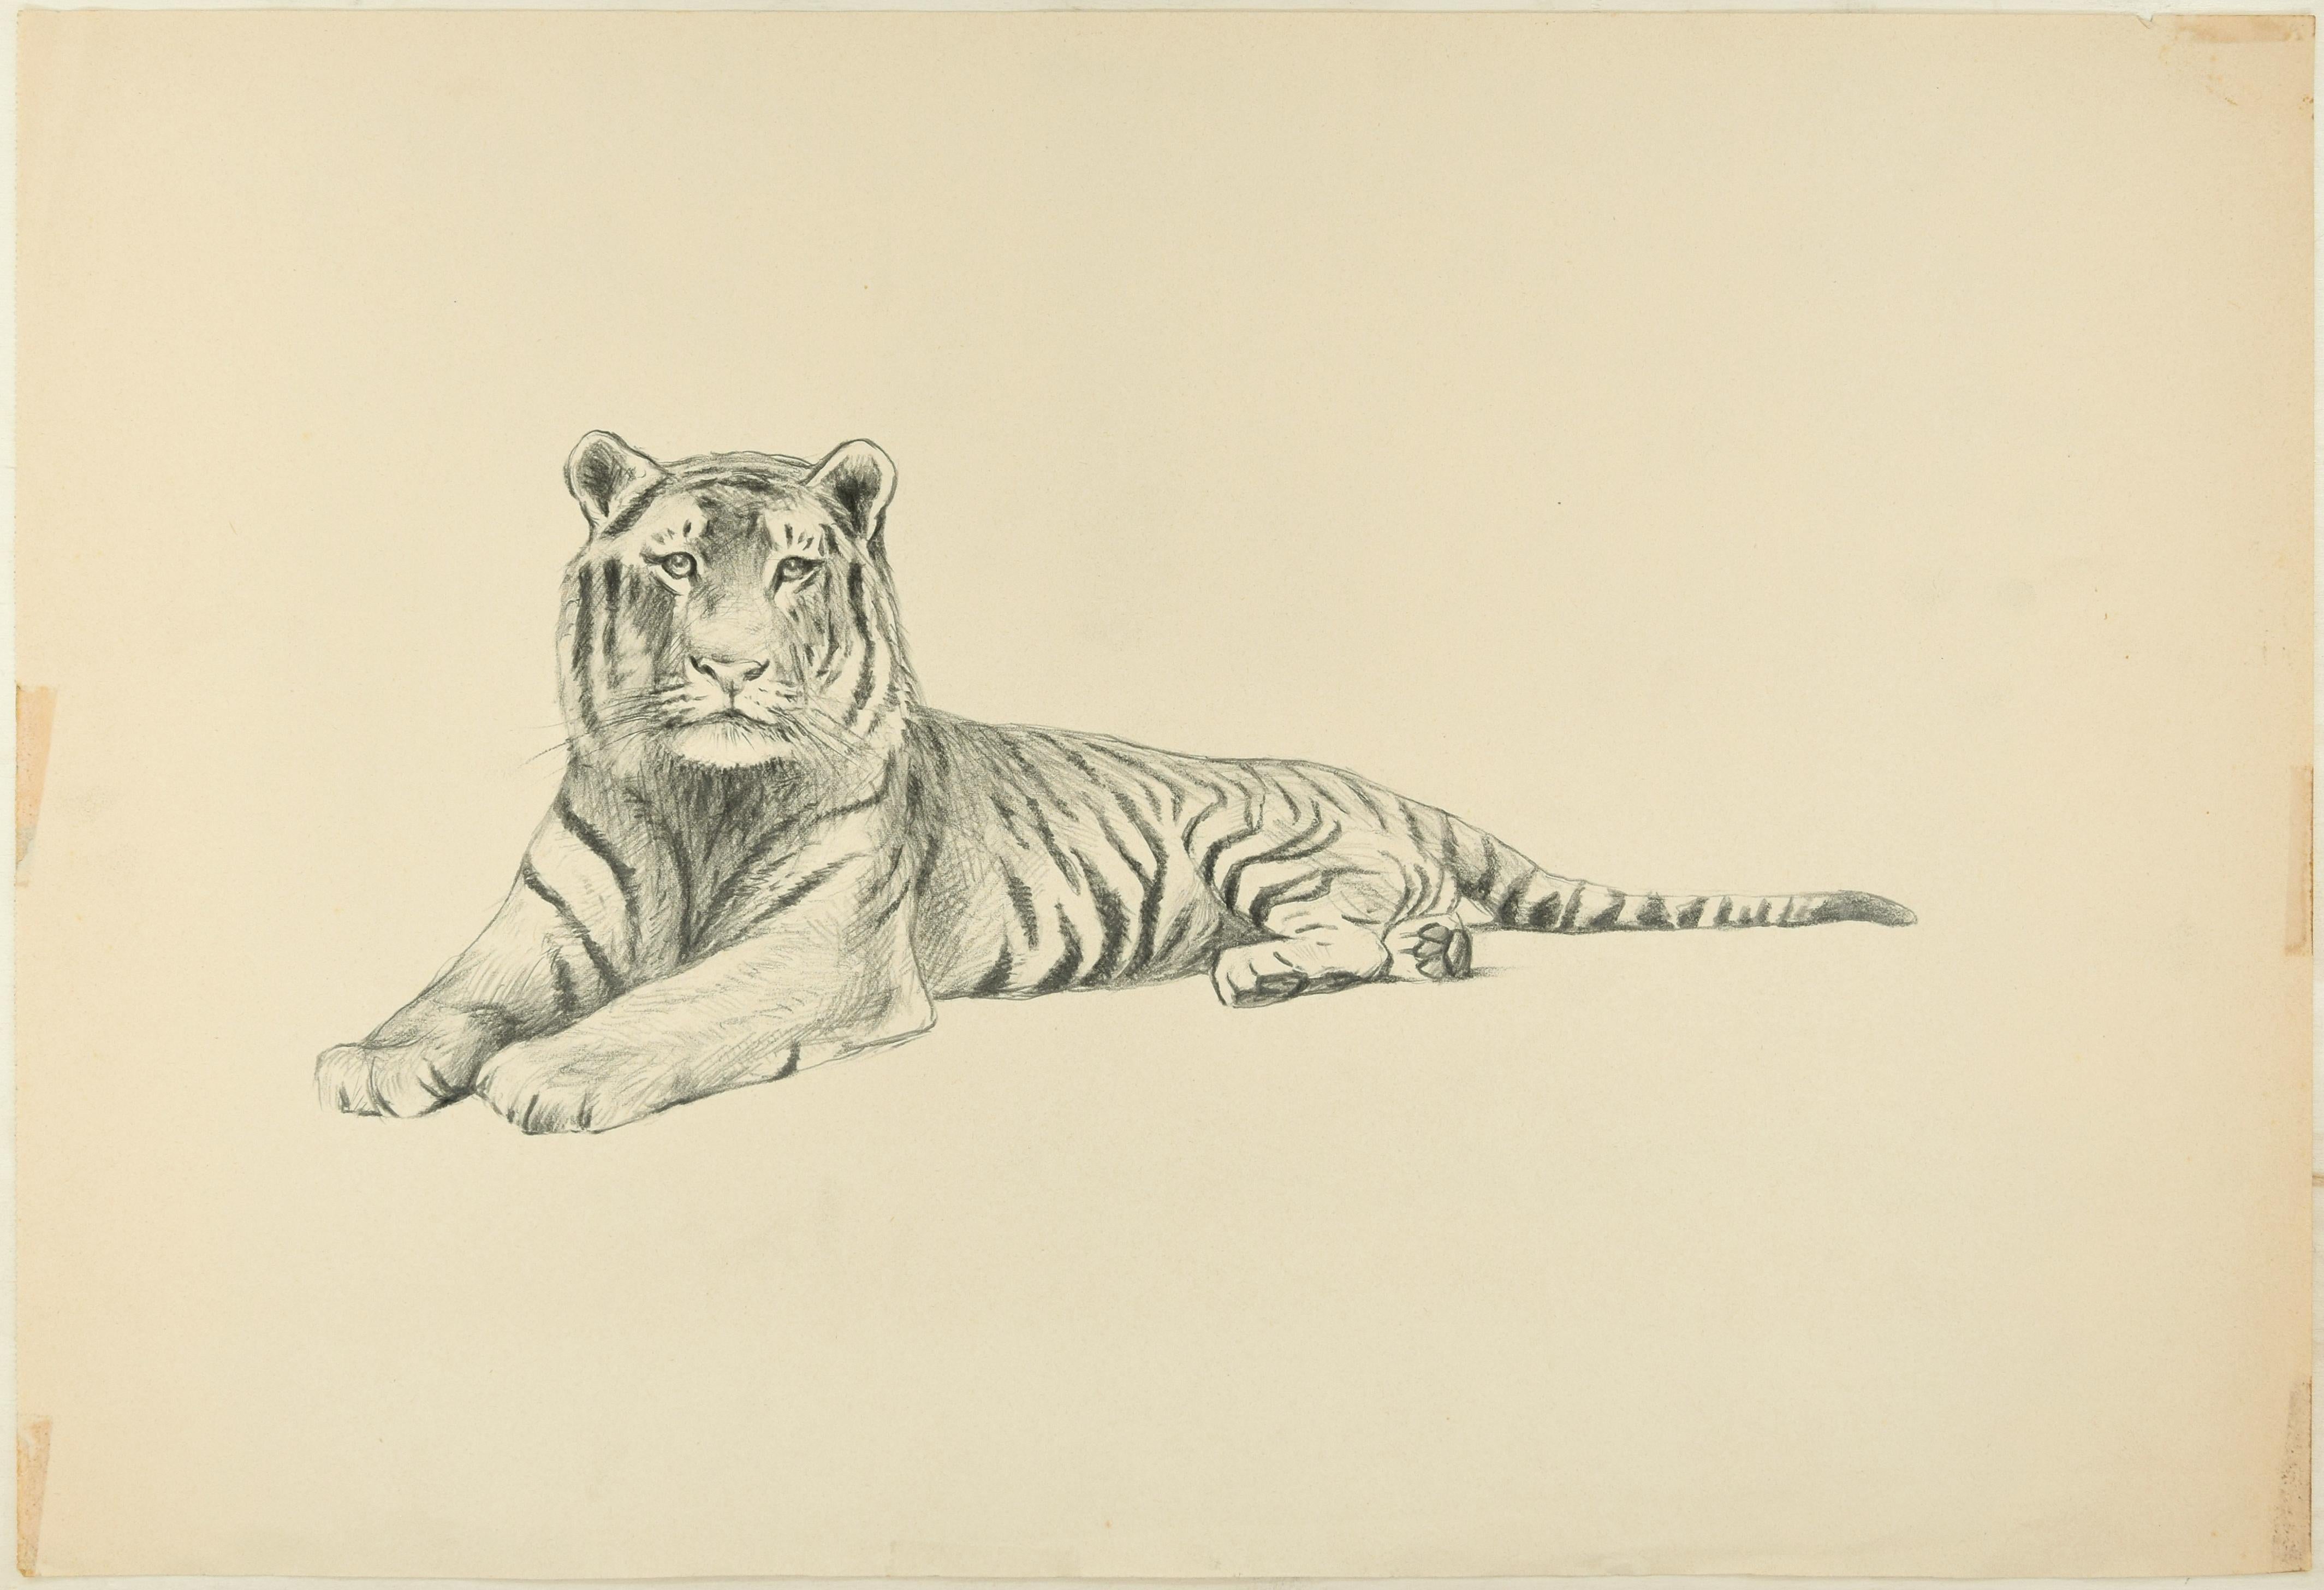 Wilhelm Lorenz Animal Art - Lying Down Tiger - Original Pencil Drawing by Willy Lorenz - 1950s